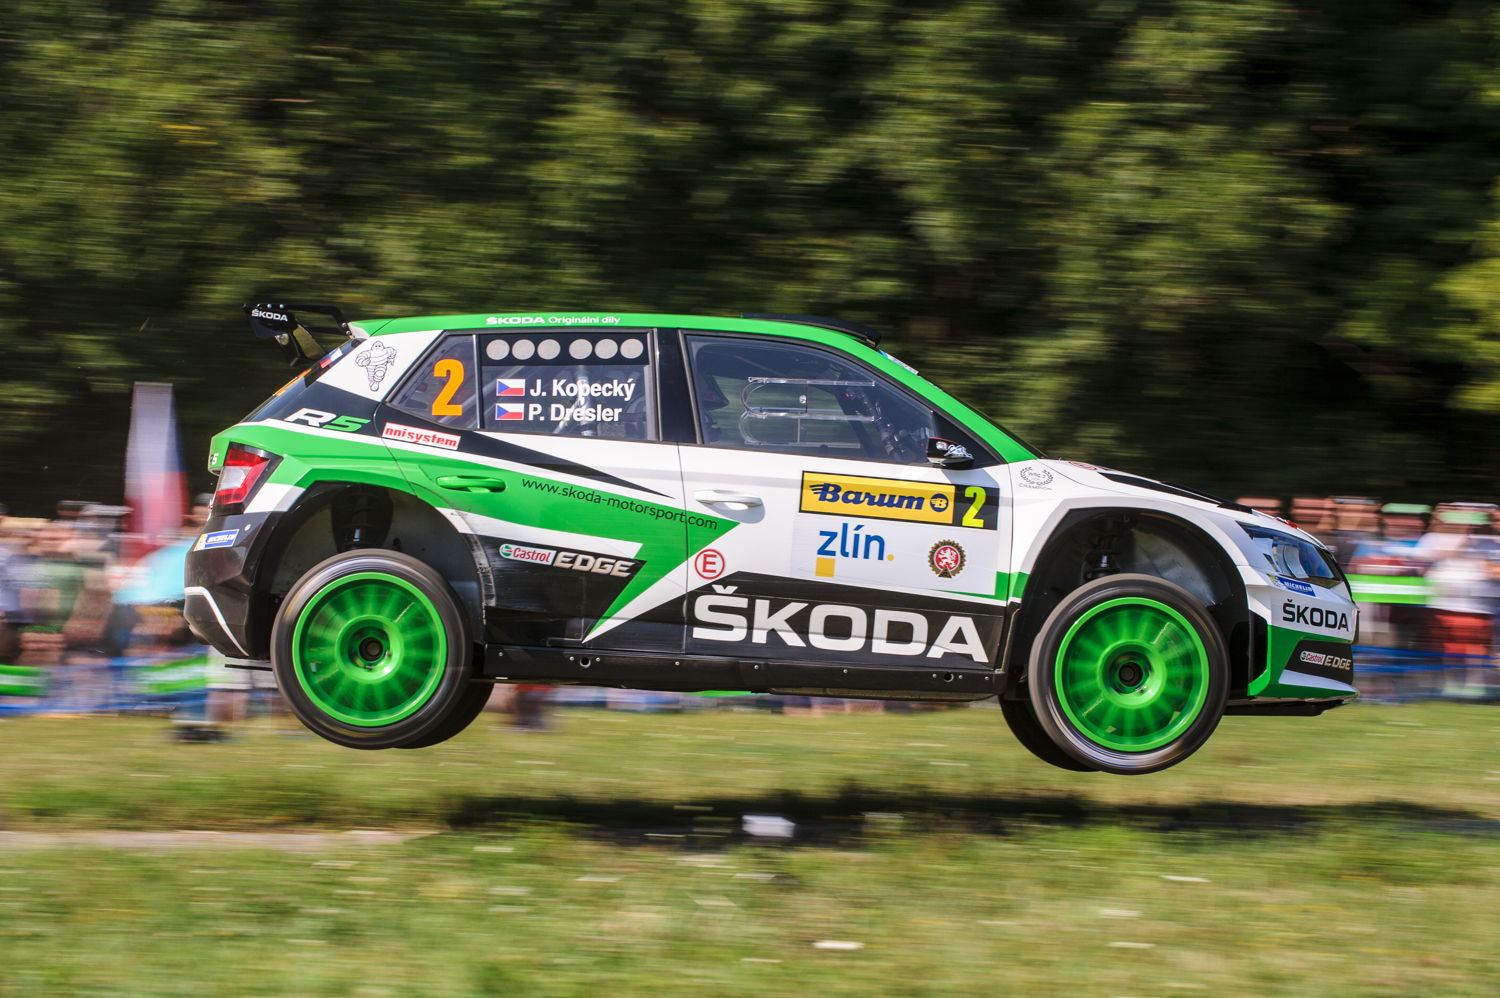 Reigning champions Jan Kopecký and Pavel Dresler (CZE/CZE), driving a ŠKODA FABIA R5, won Barum Czech Rally Zlín, their personal sixth win in a row in the Czech Rally Championship.